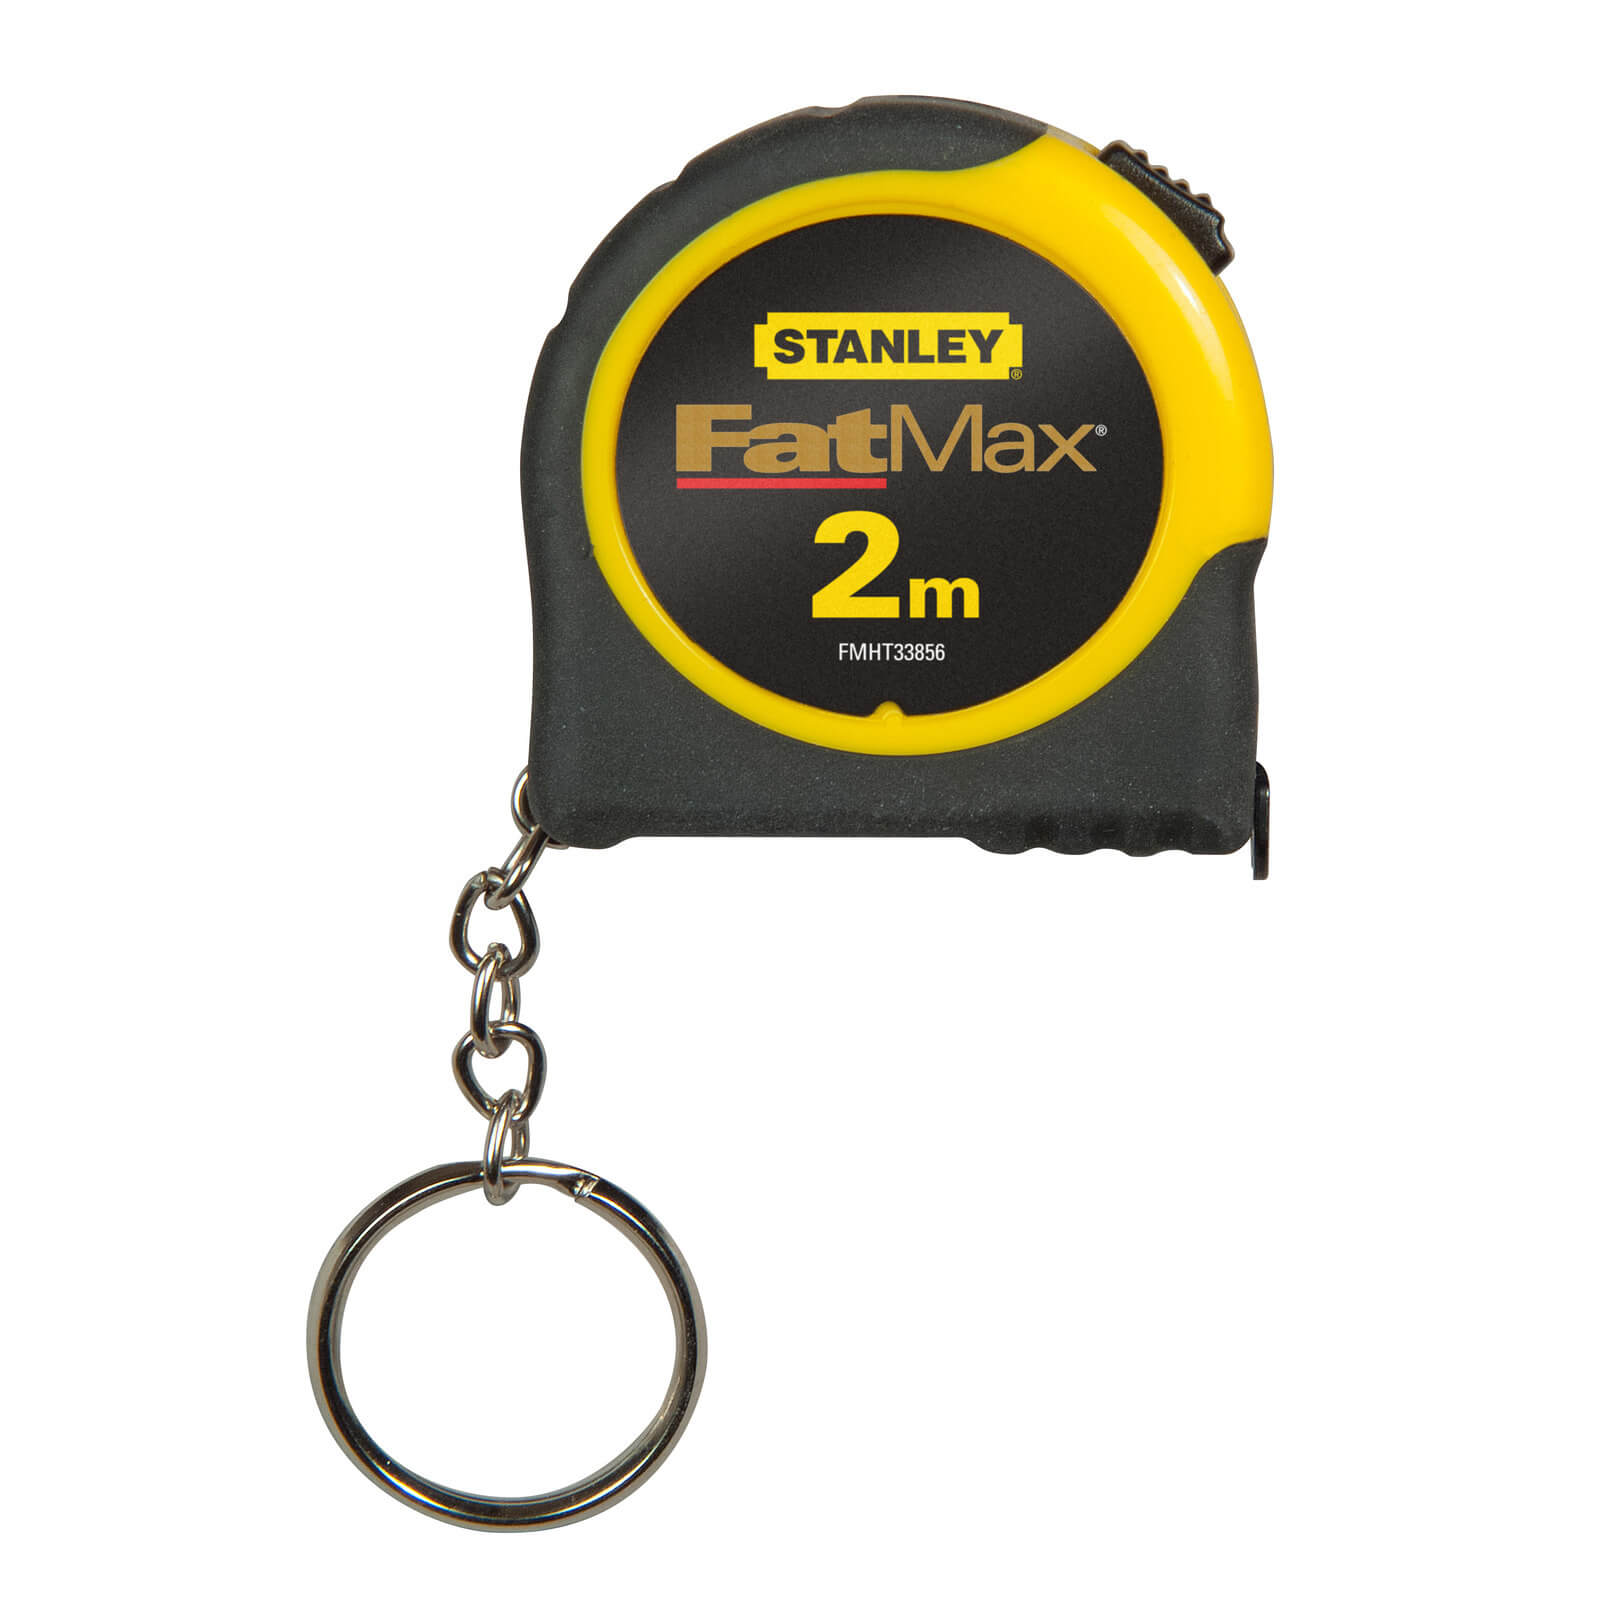 Stanley Fatmax 2m Keychain Tape